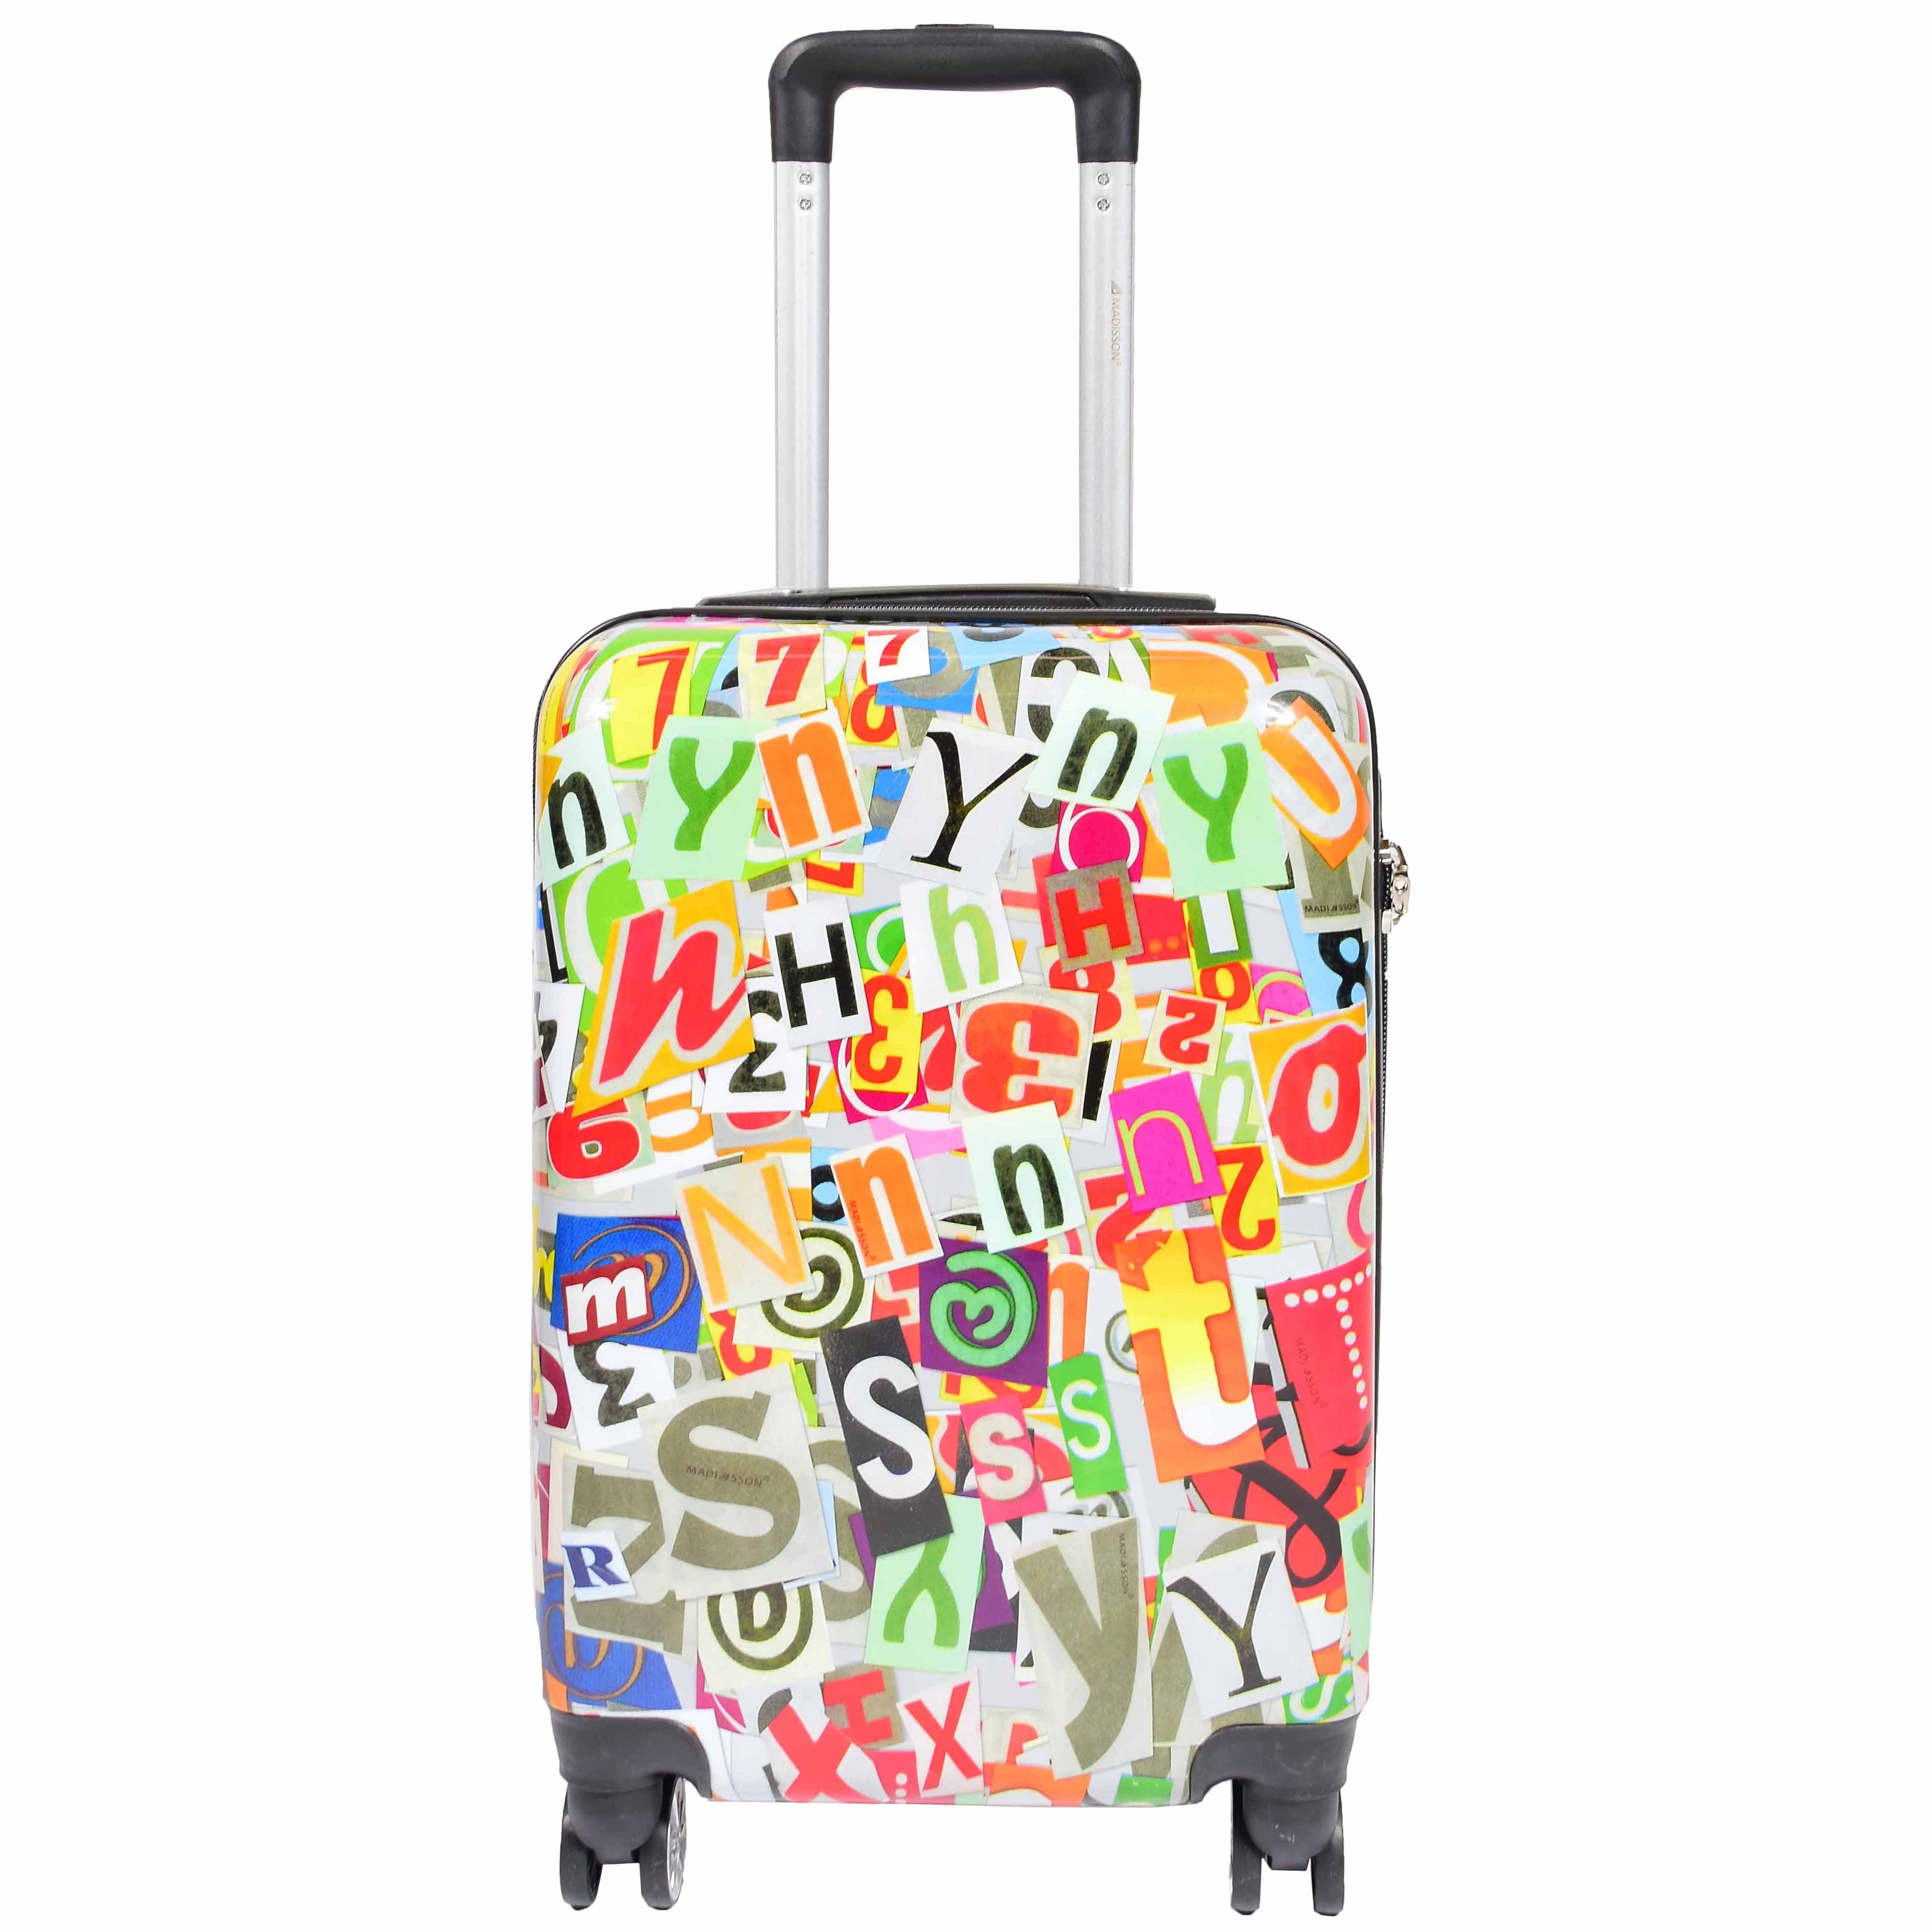 DR551 Wheeled Hard Cabin Luggage Alphabets Print | Divergent Retail